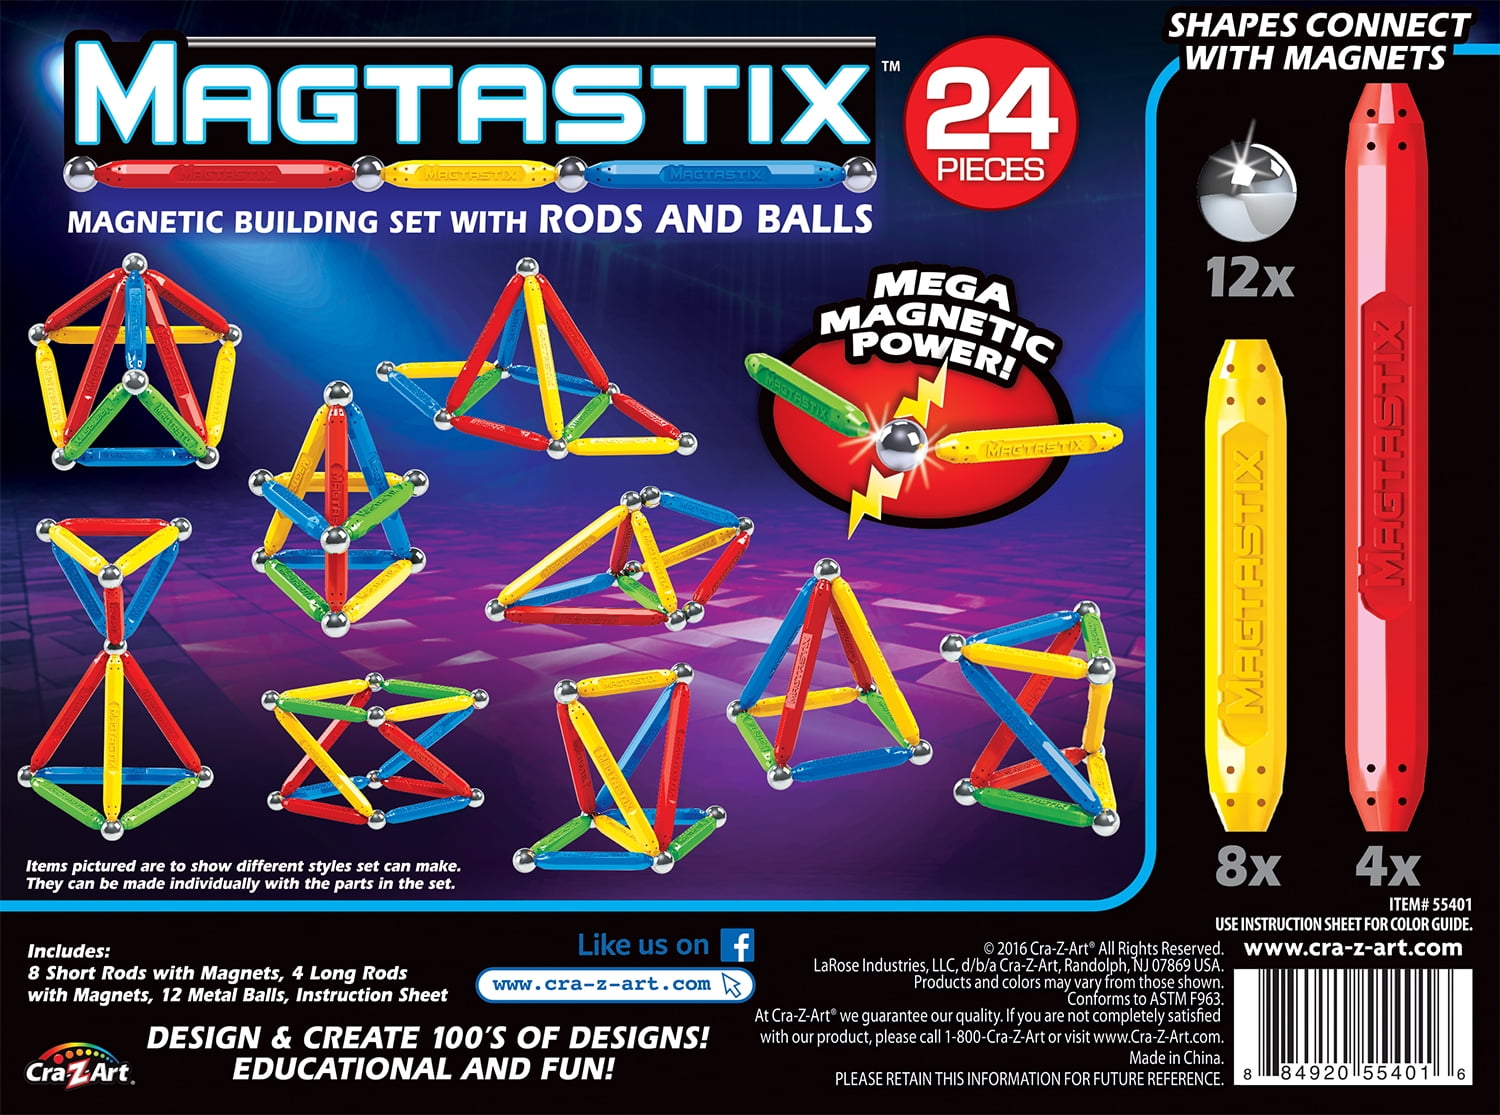 CRA-Z-ART Magtastix Balls and Rods Building Kit 45 Piece for sale online 